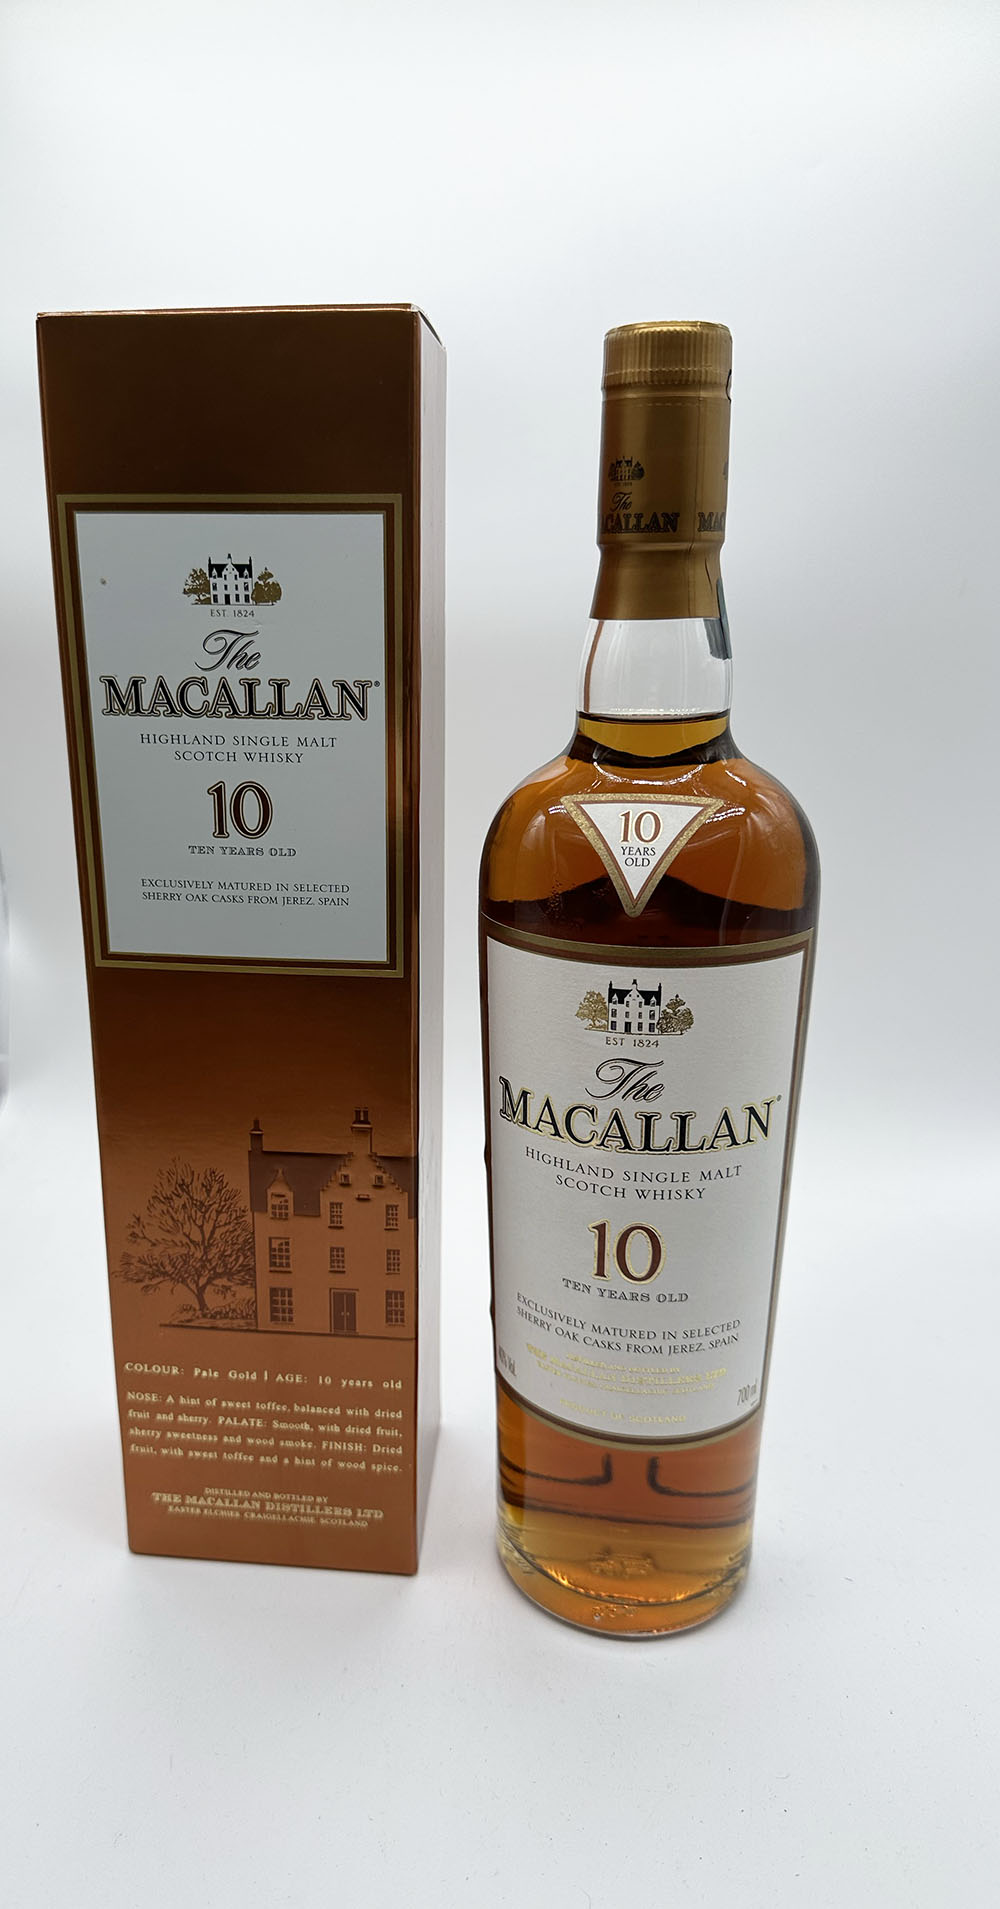 A Macallan 10 year old malt whisky